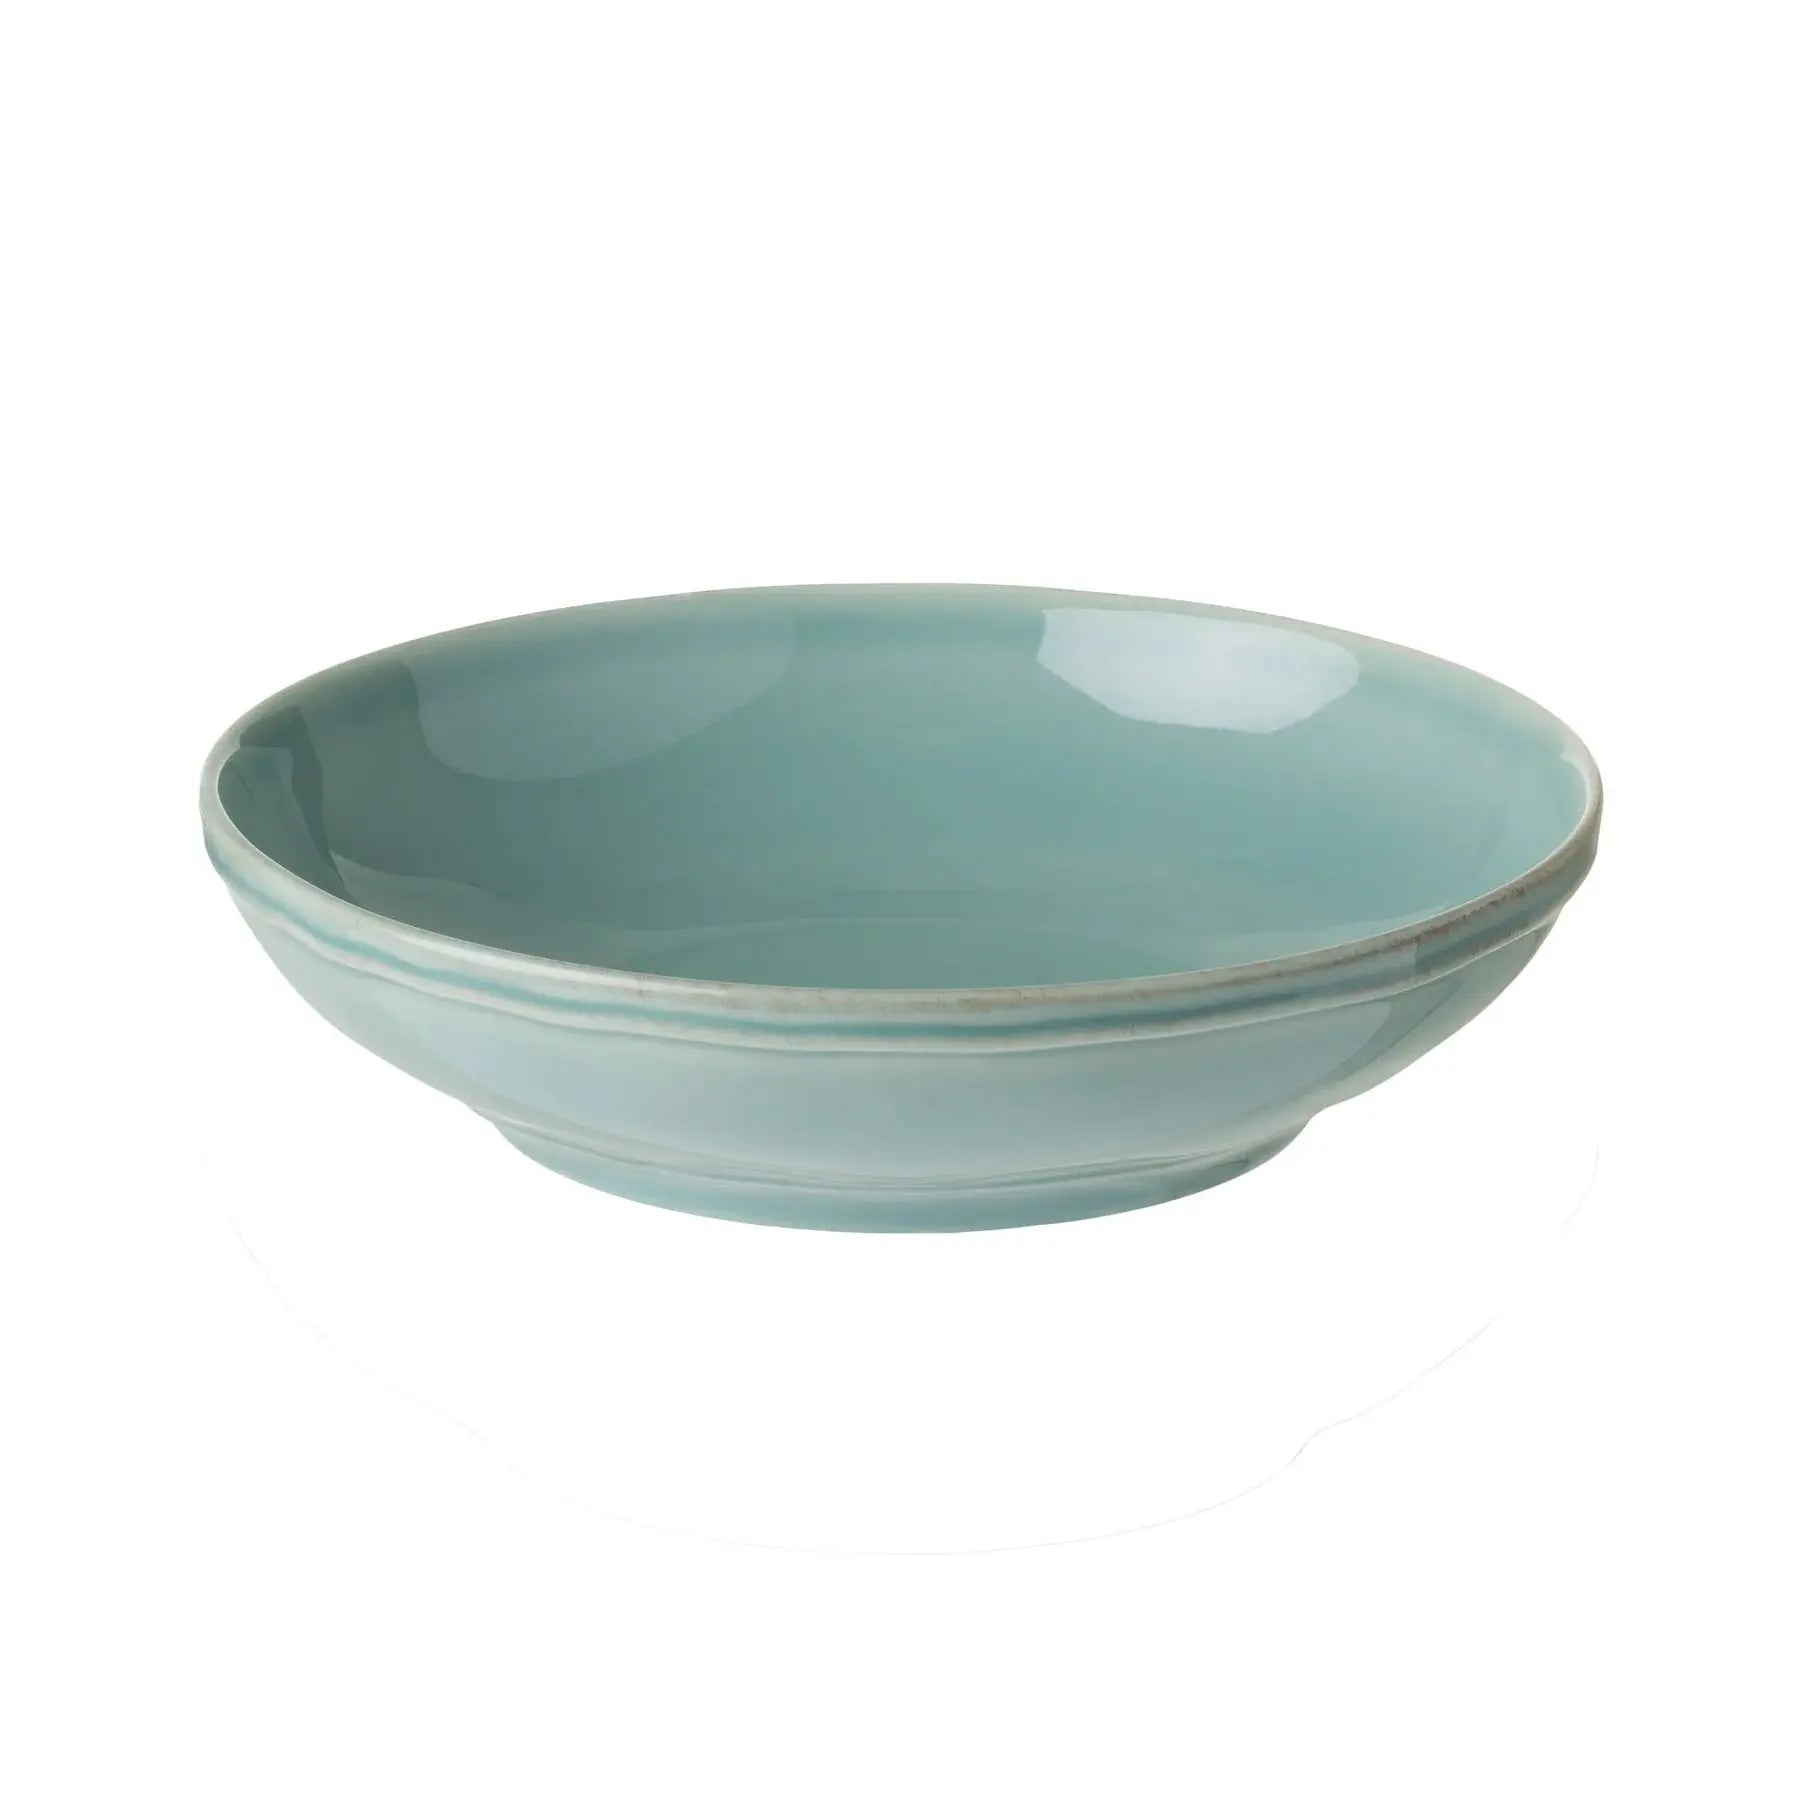 Casafina Fontana Pasta Bowl in Turquoise